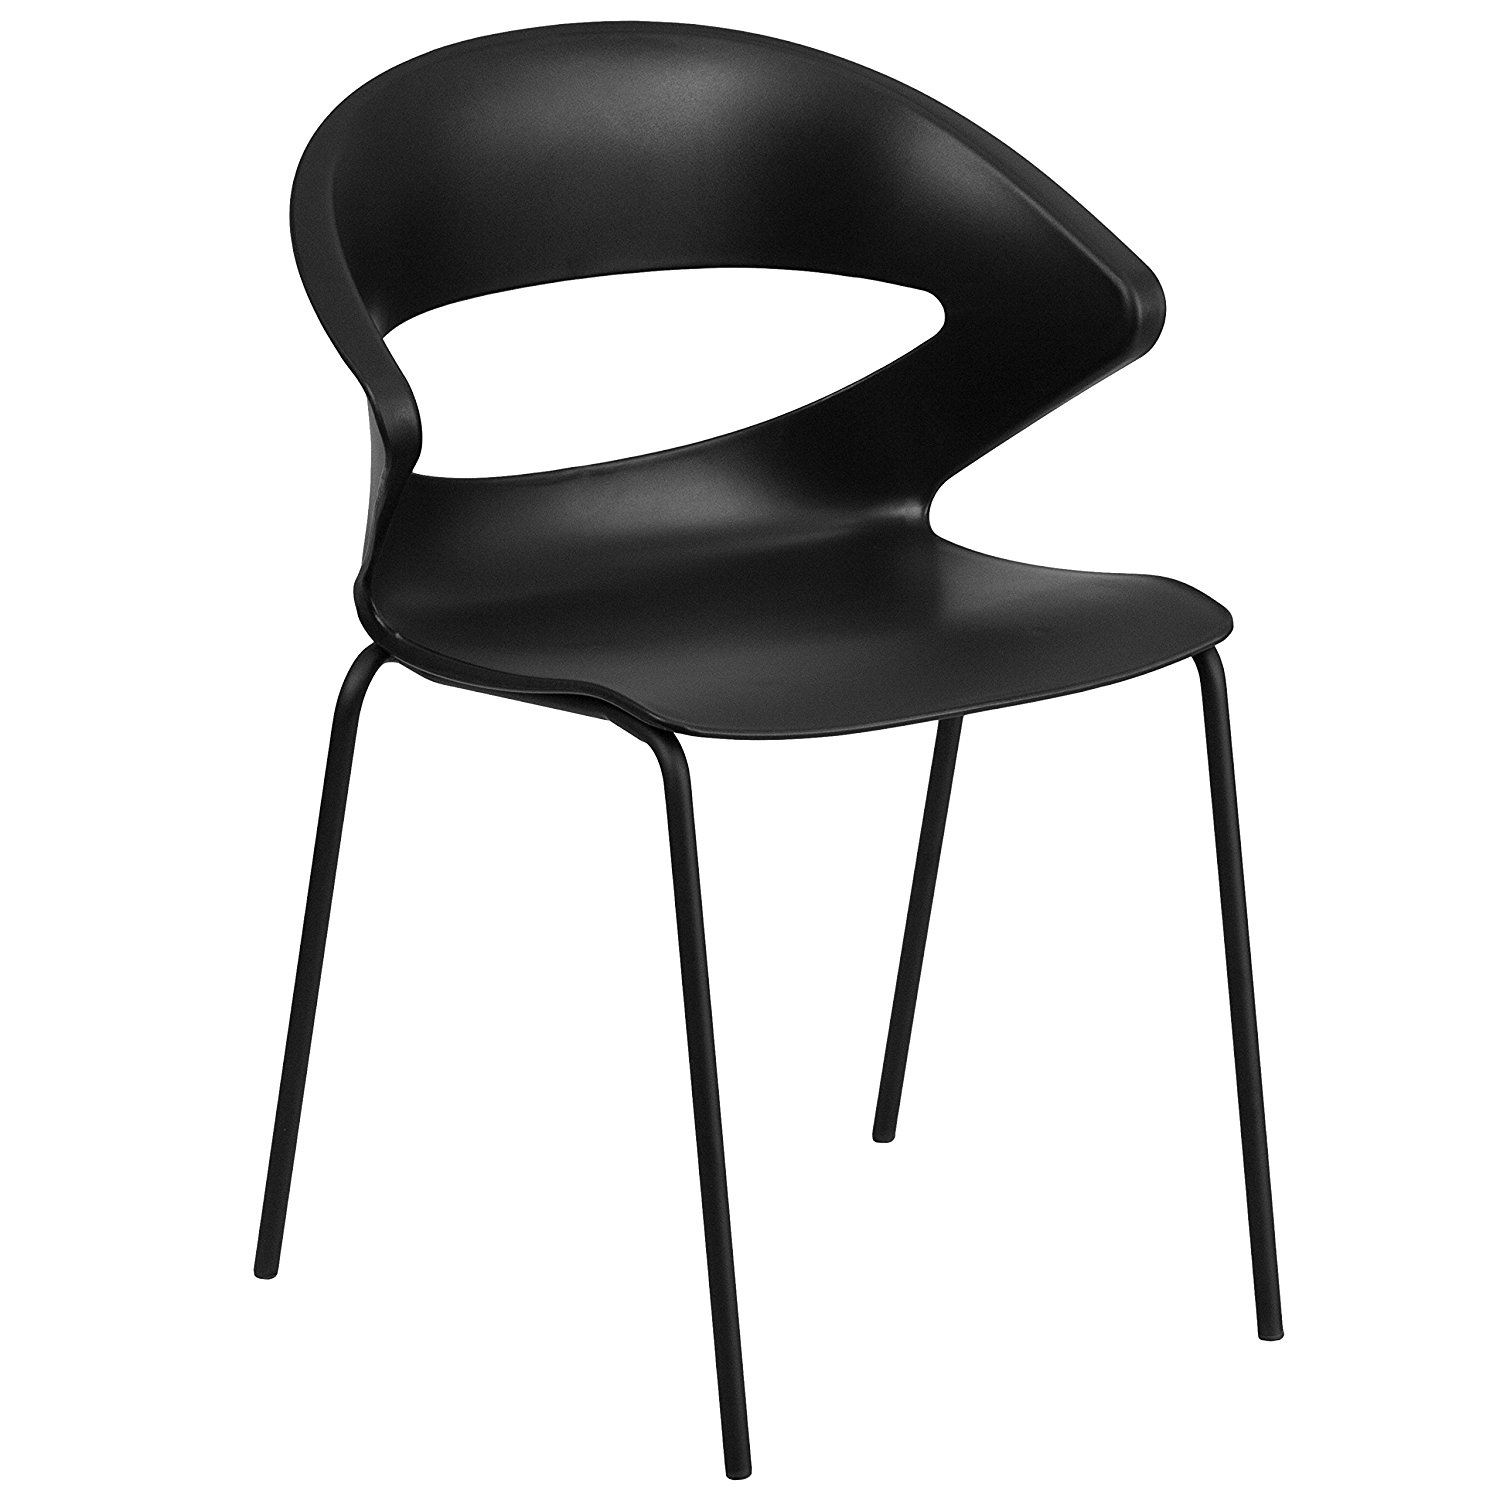 HERCULES Series 440 lb. Capacity Black Stack Chair - Plastic Chairs